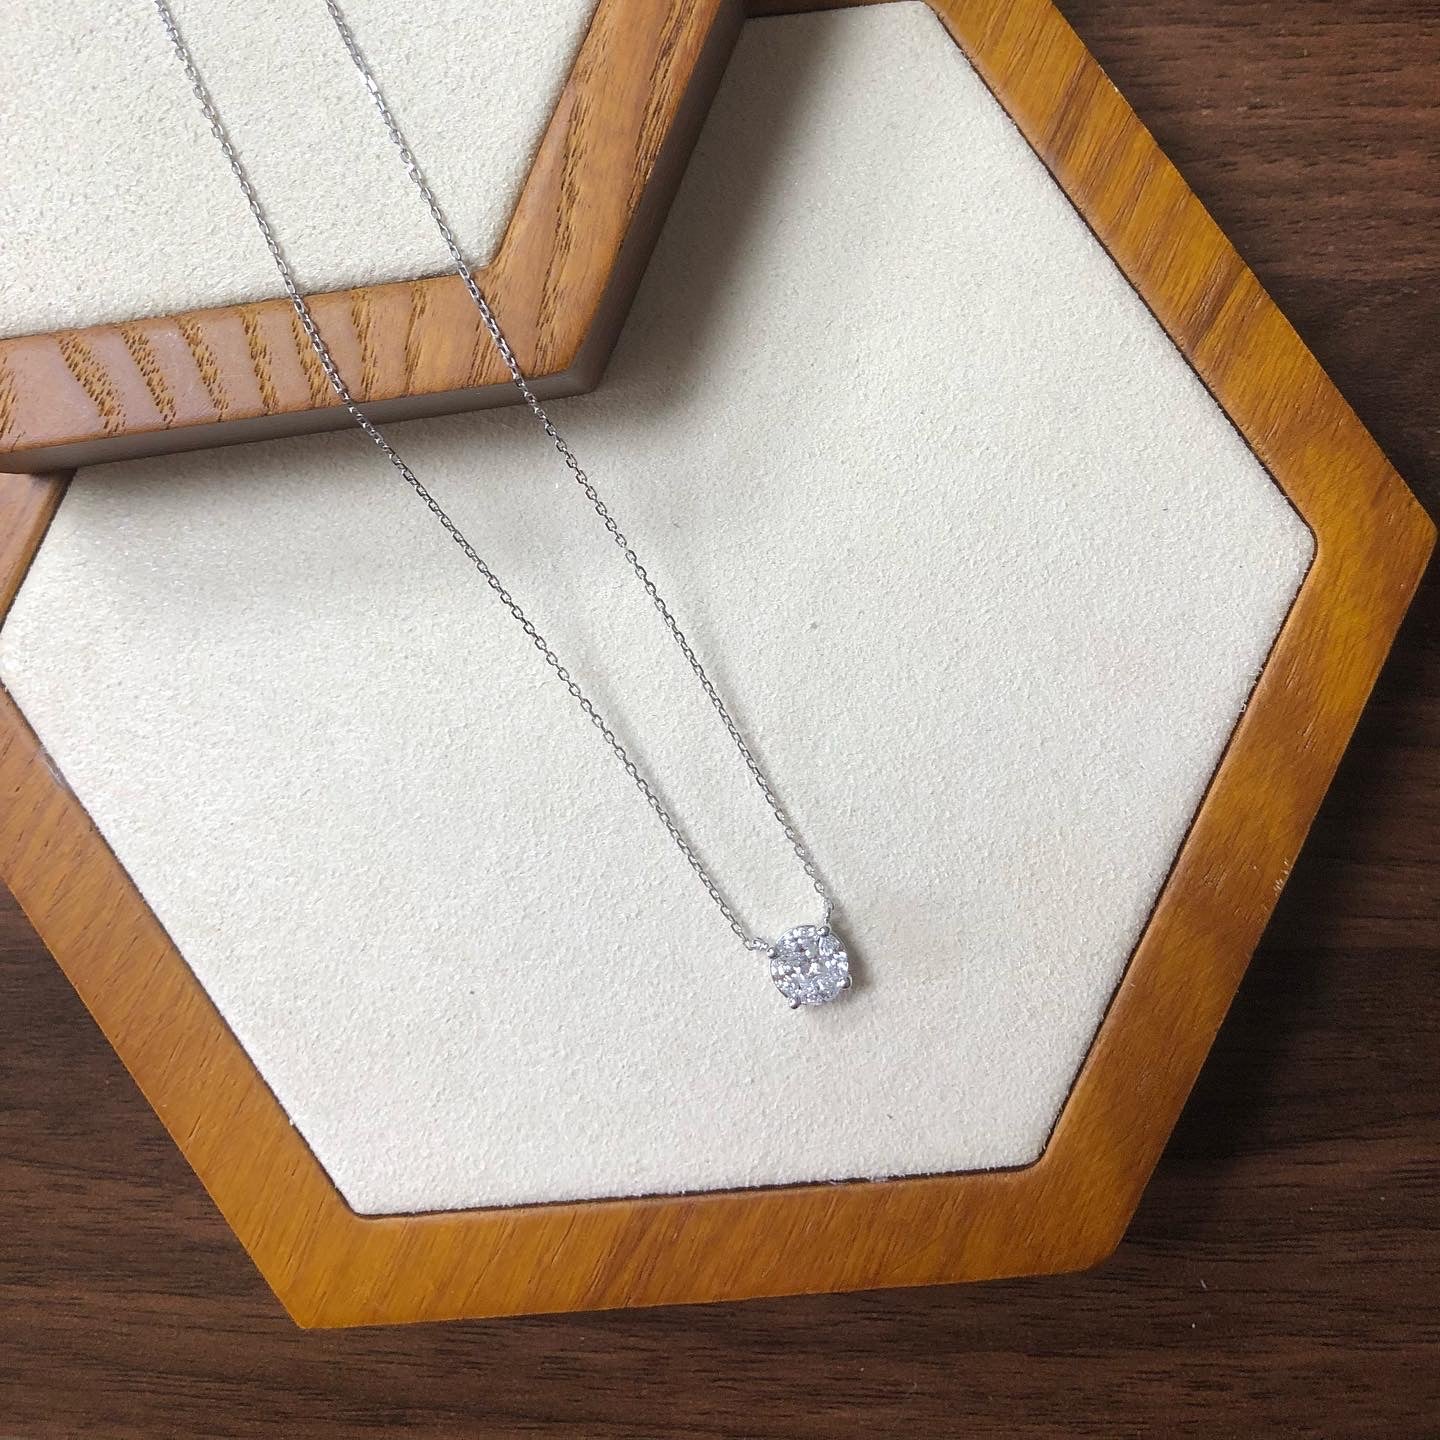 18k白金圓形拼鑽頸鍊 18k White Gold Illusion Setting Round Diamond Necklace